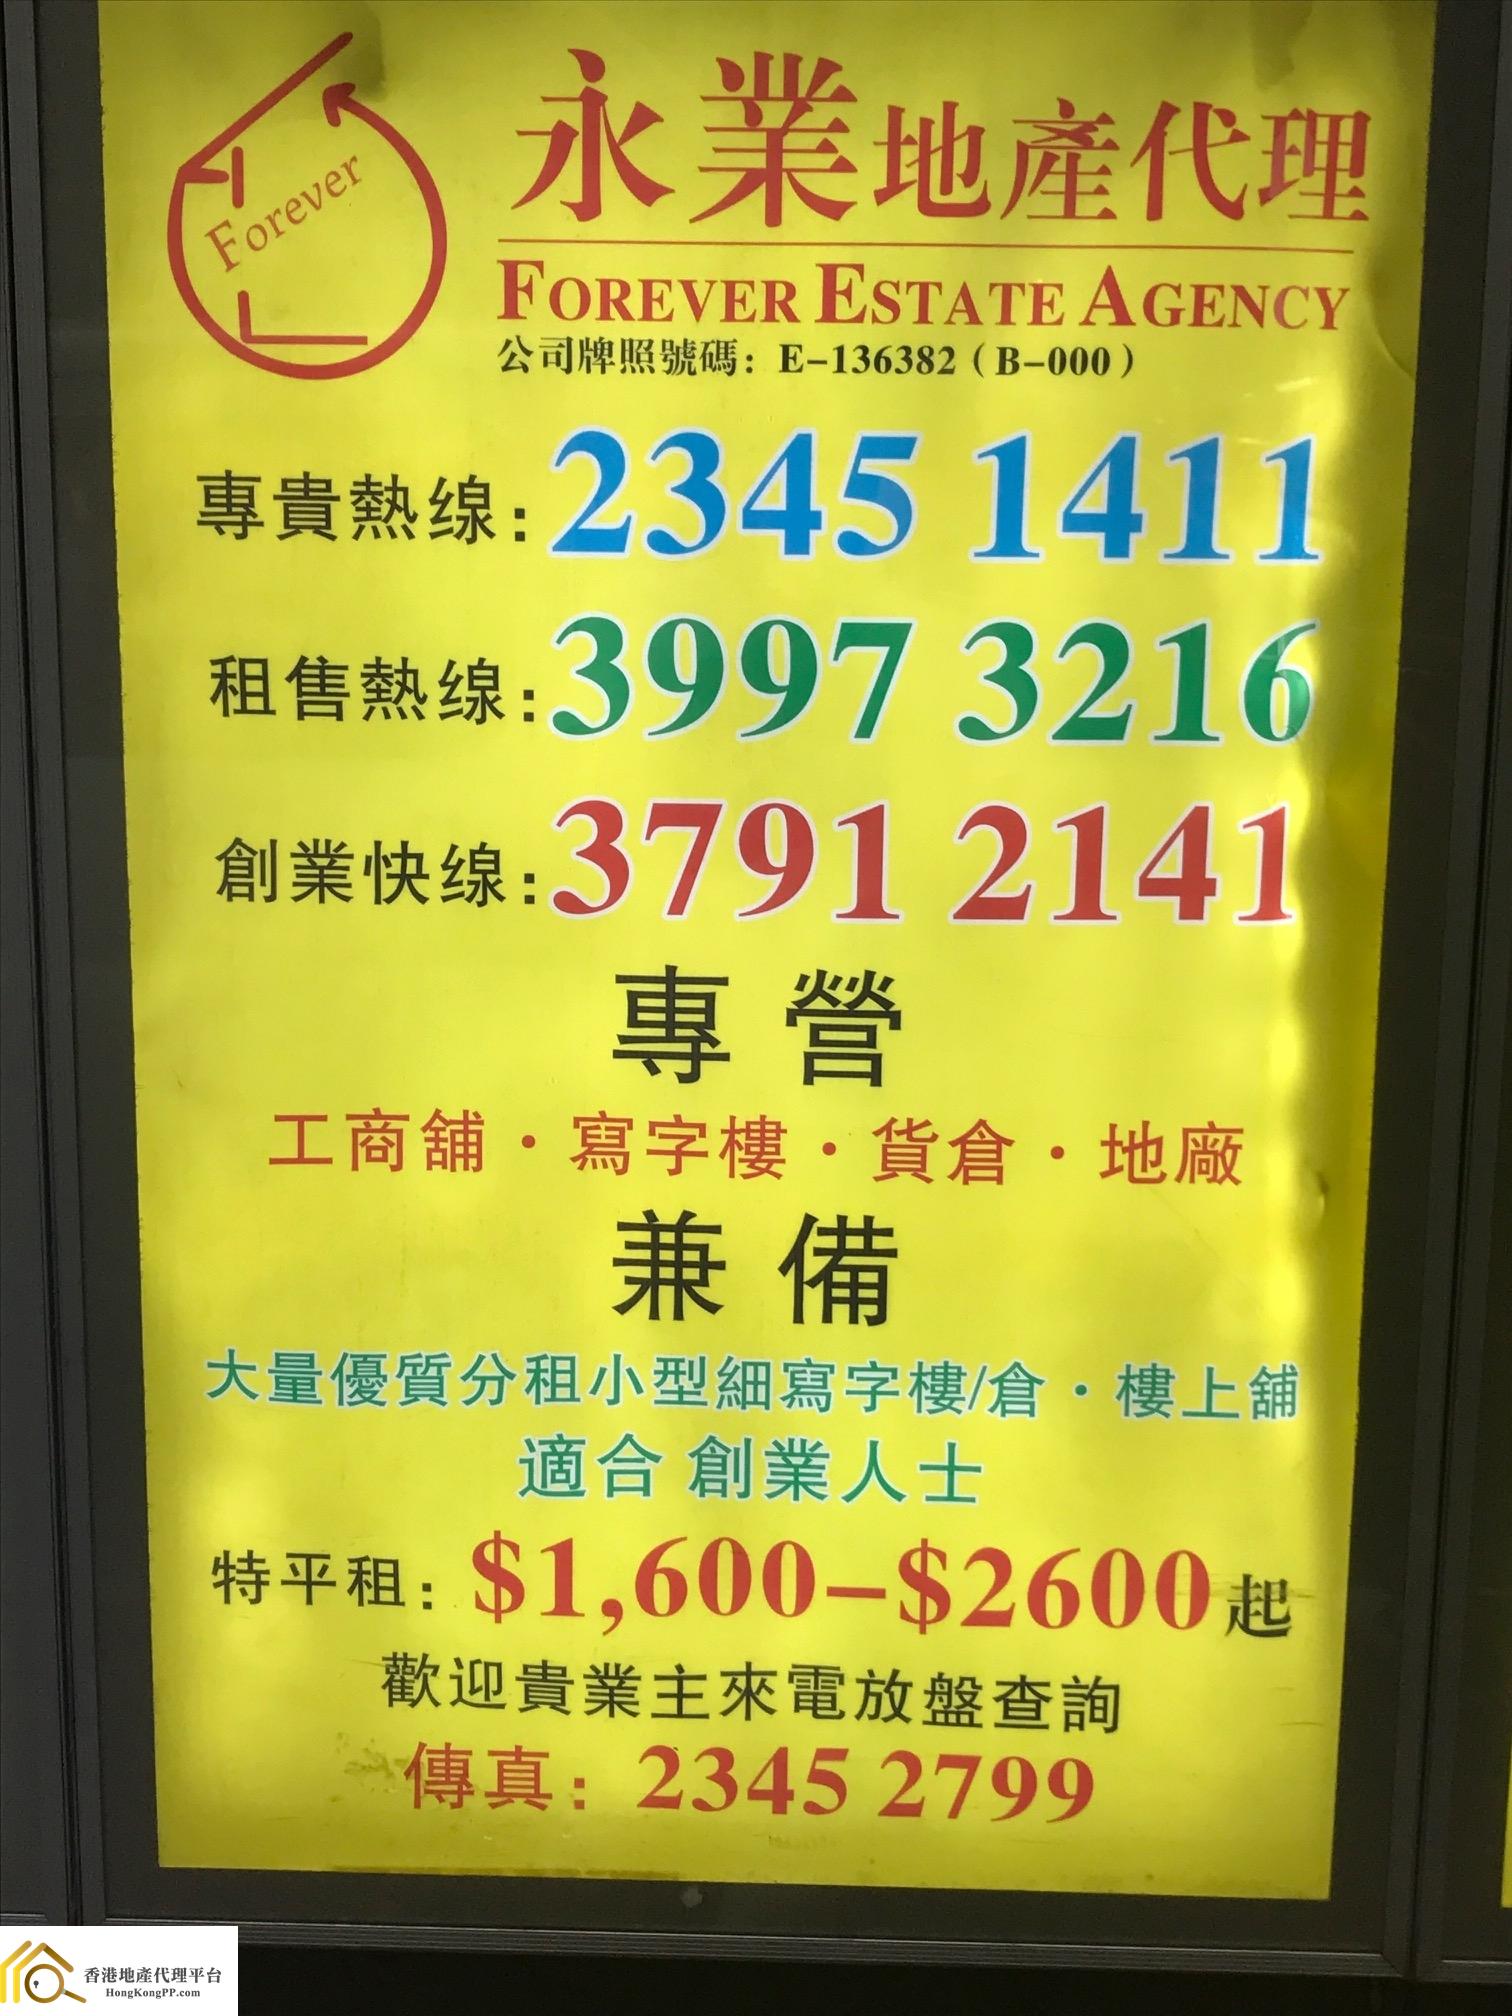 CarparkEstate Agent: 永業地產代理 Forever Estate Agency 